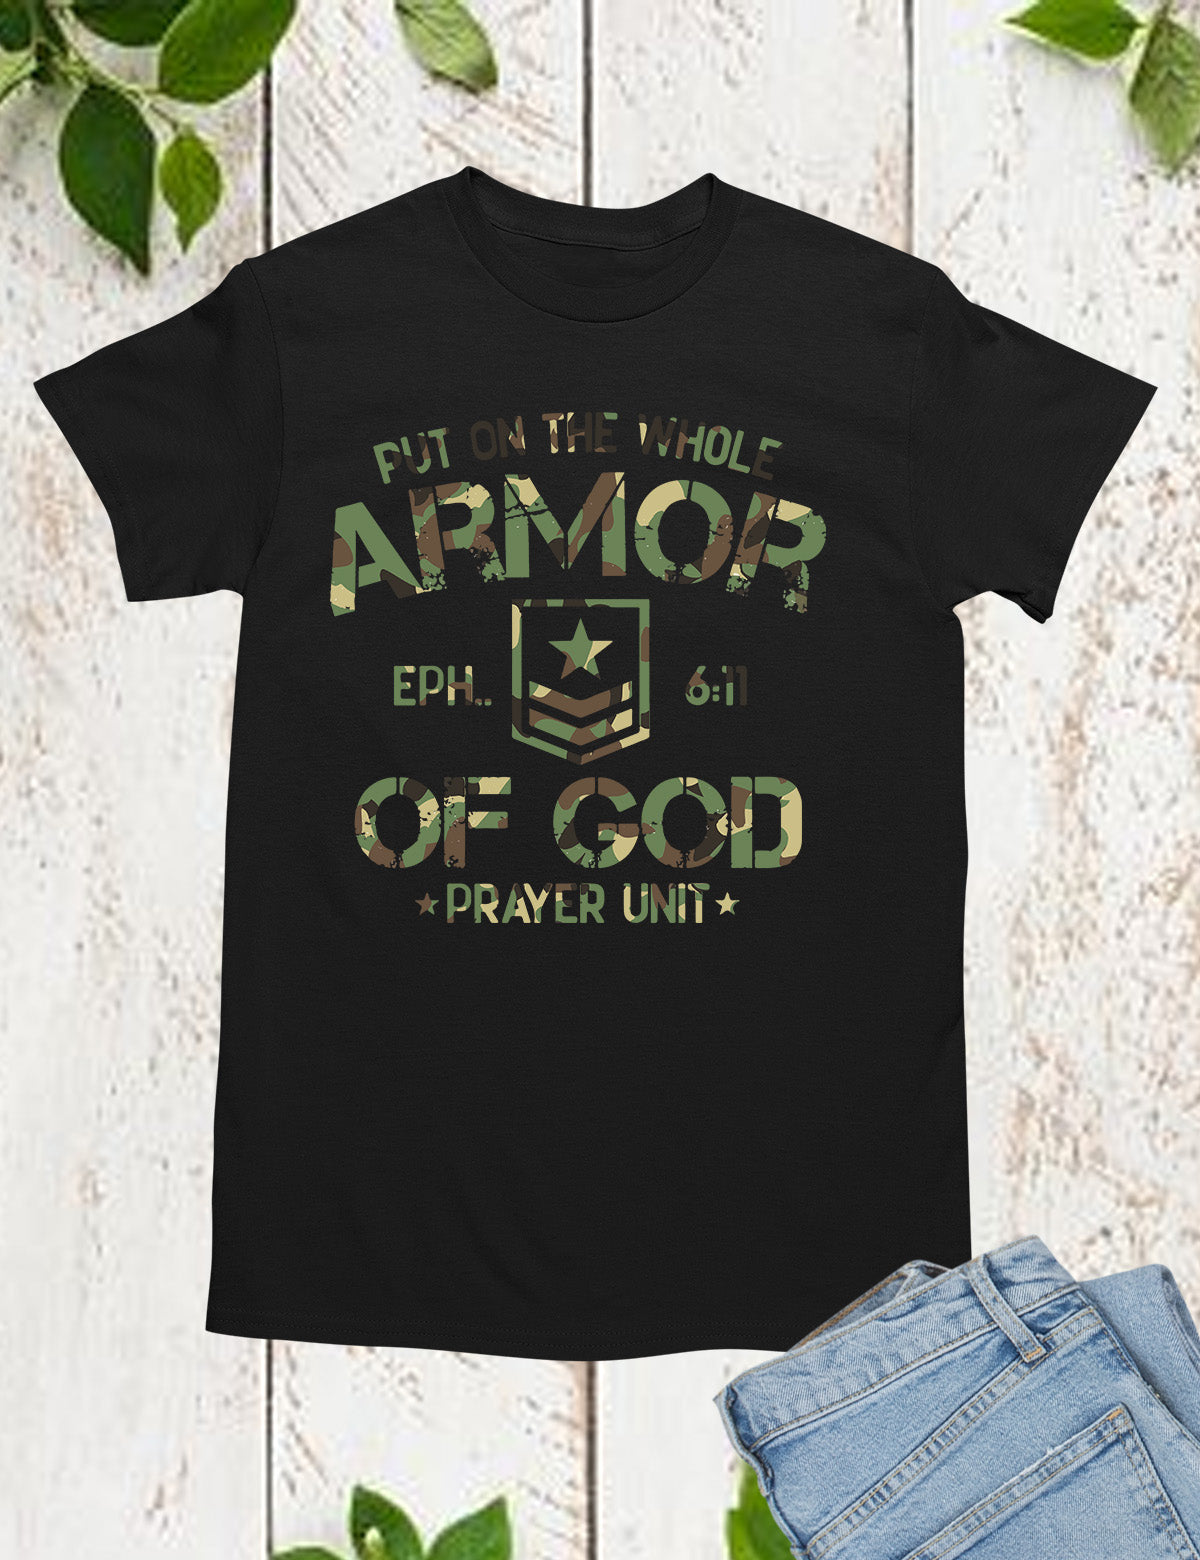 Put On The Whole Armour of God Prayer Unit Shirts